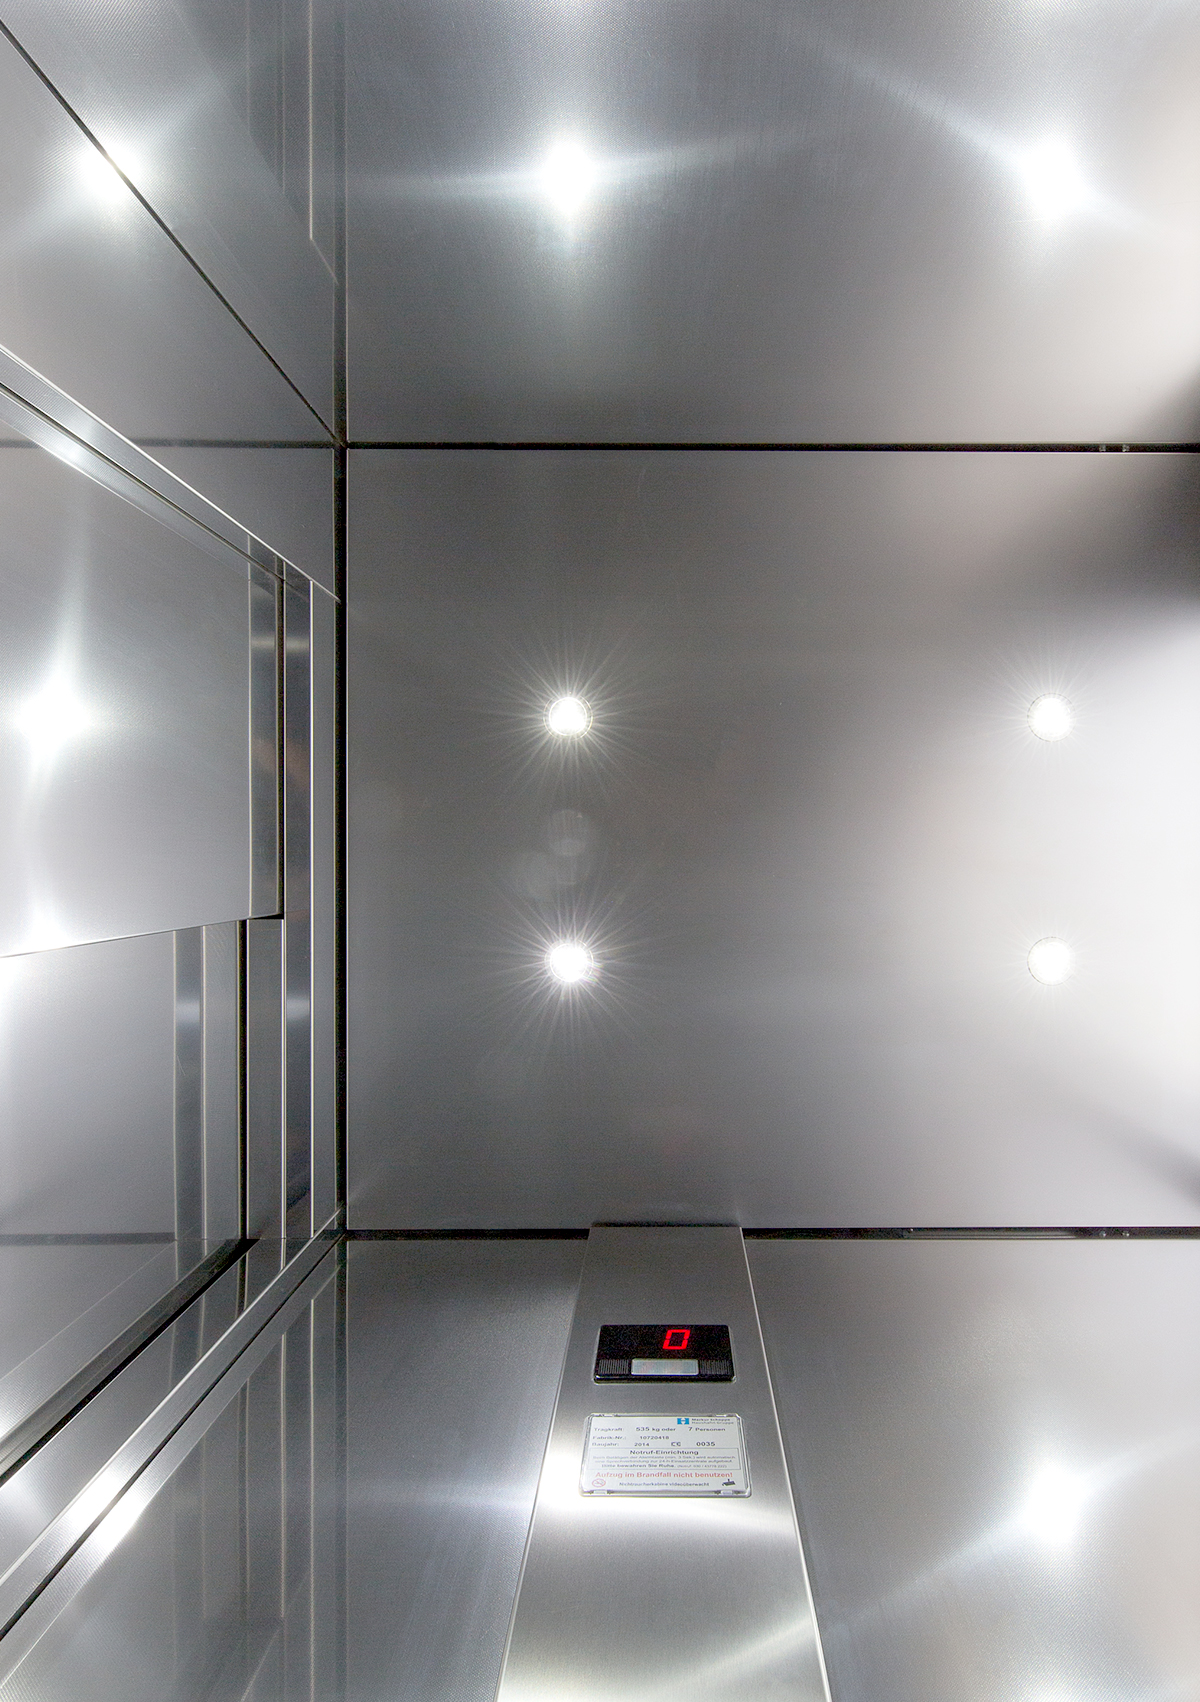 Haushahn LED-Kabinenbeleuchtung - Blick auf Kabinendecke mit Beleuchtung